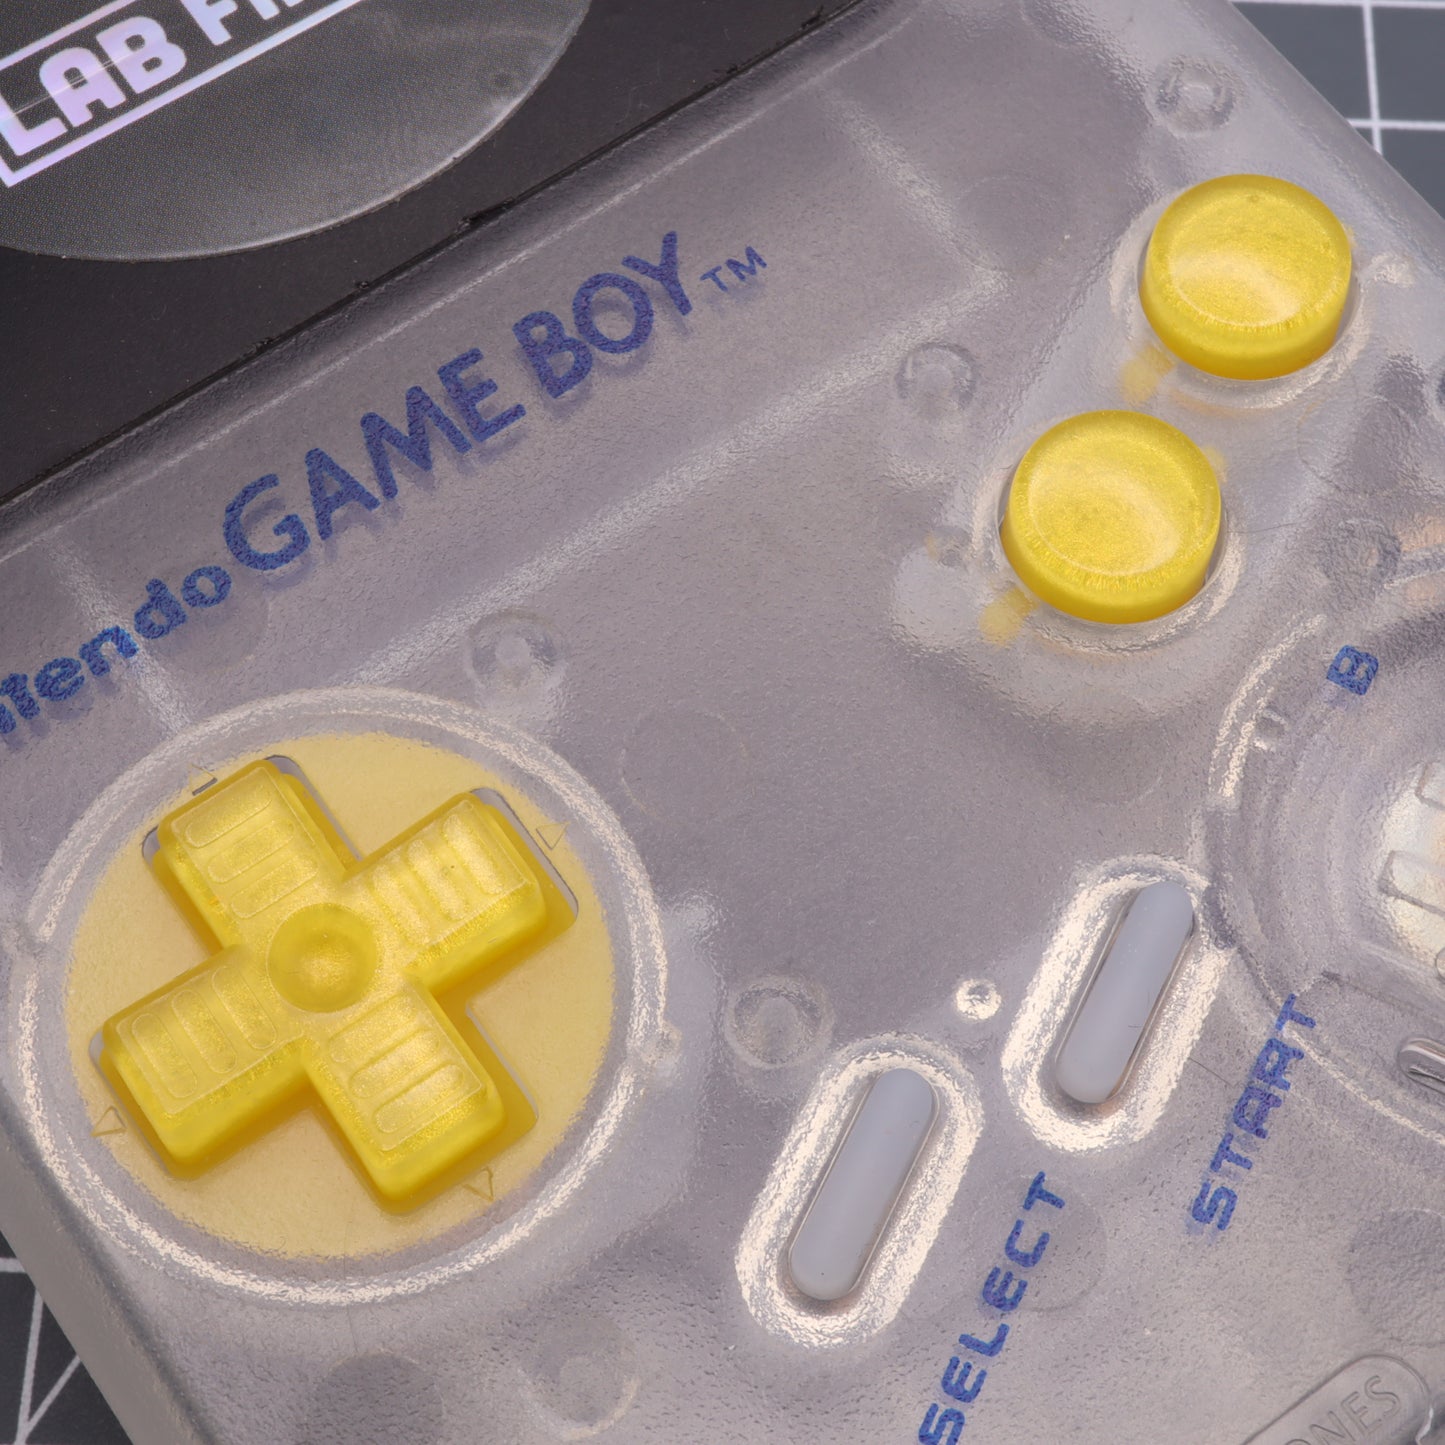 Game Boy DMG - Custom Button - Lemon Candy